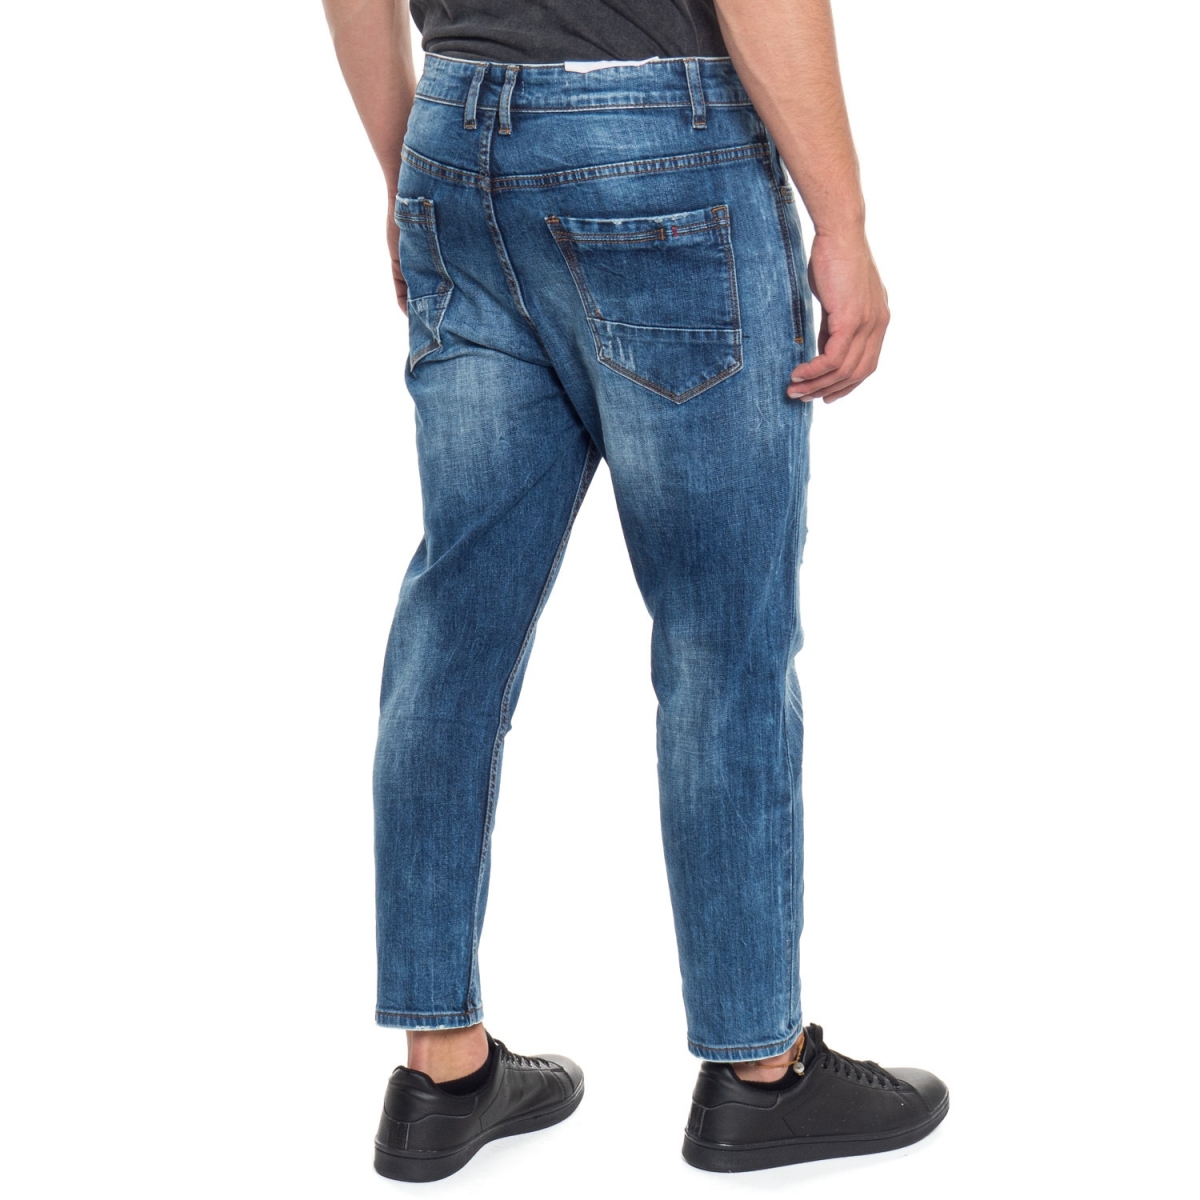 abbigliamento Jeans uomo Jeans Slim Fit LPY1799 LANDEK PARK Cafedelmar Shop